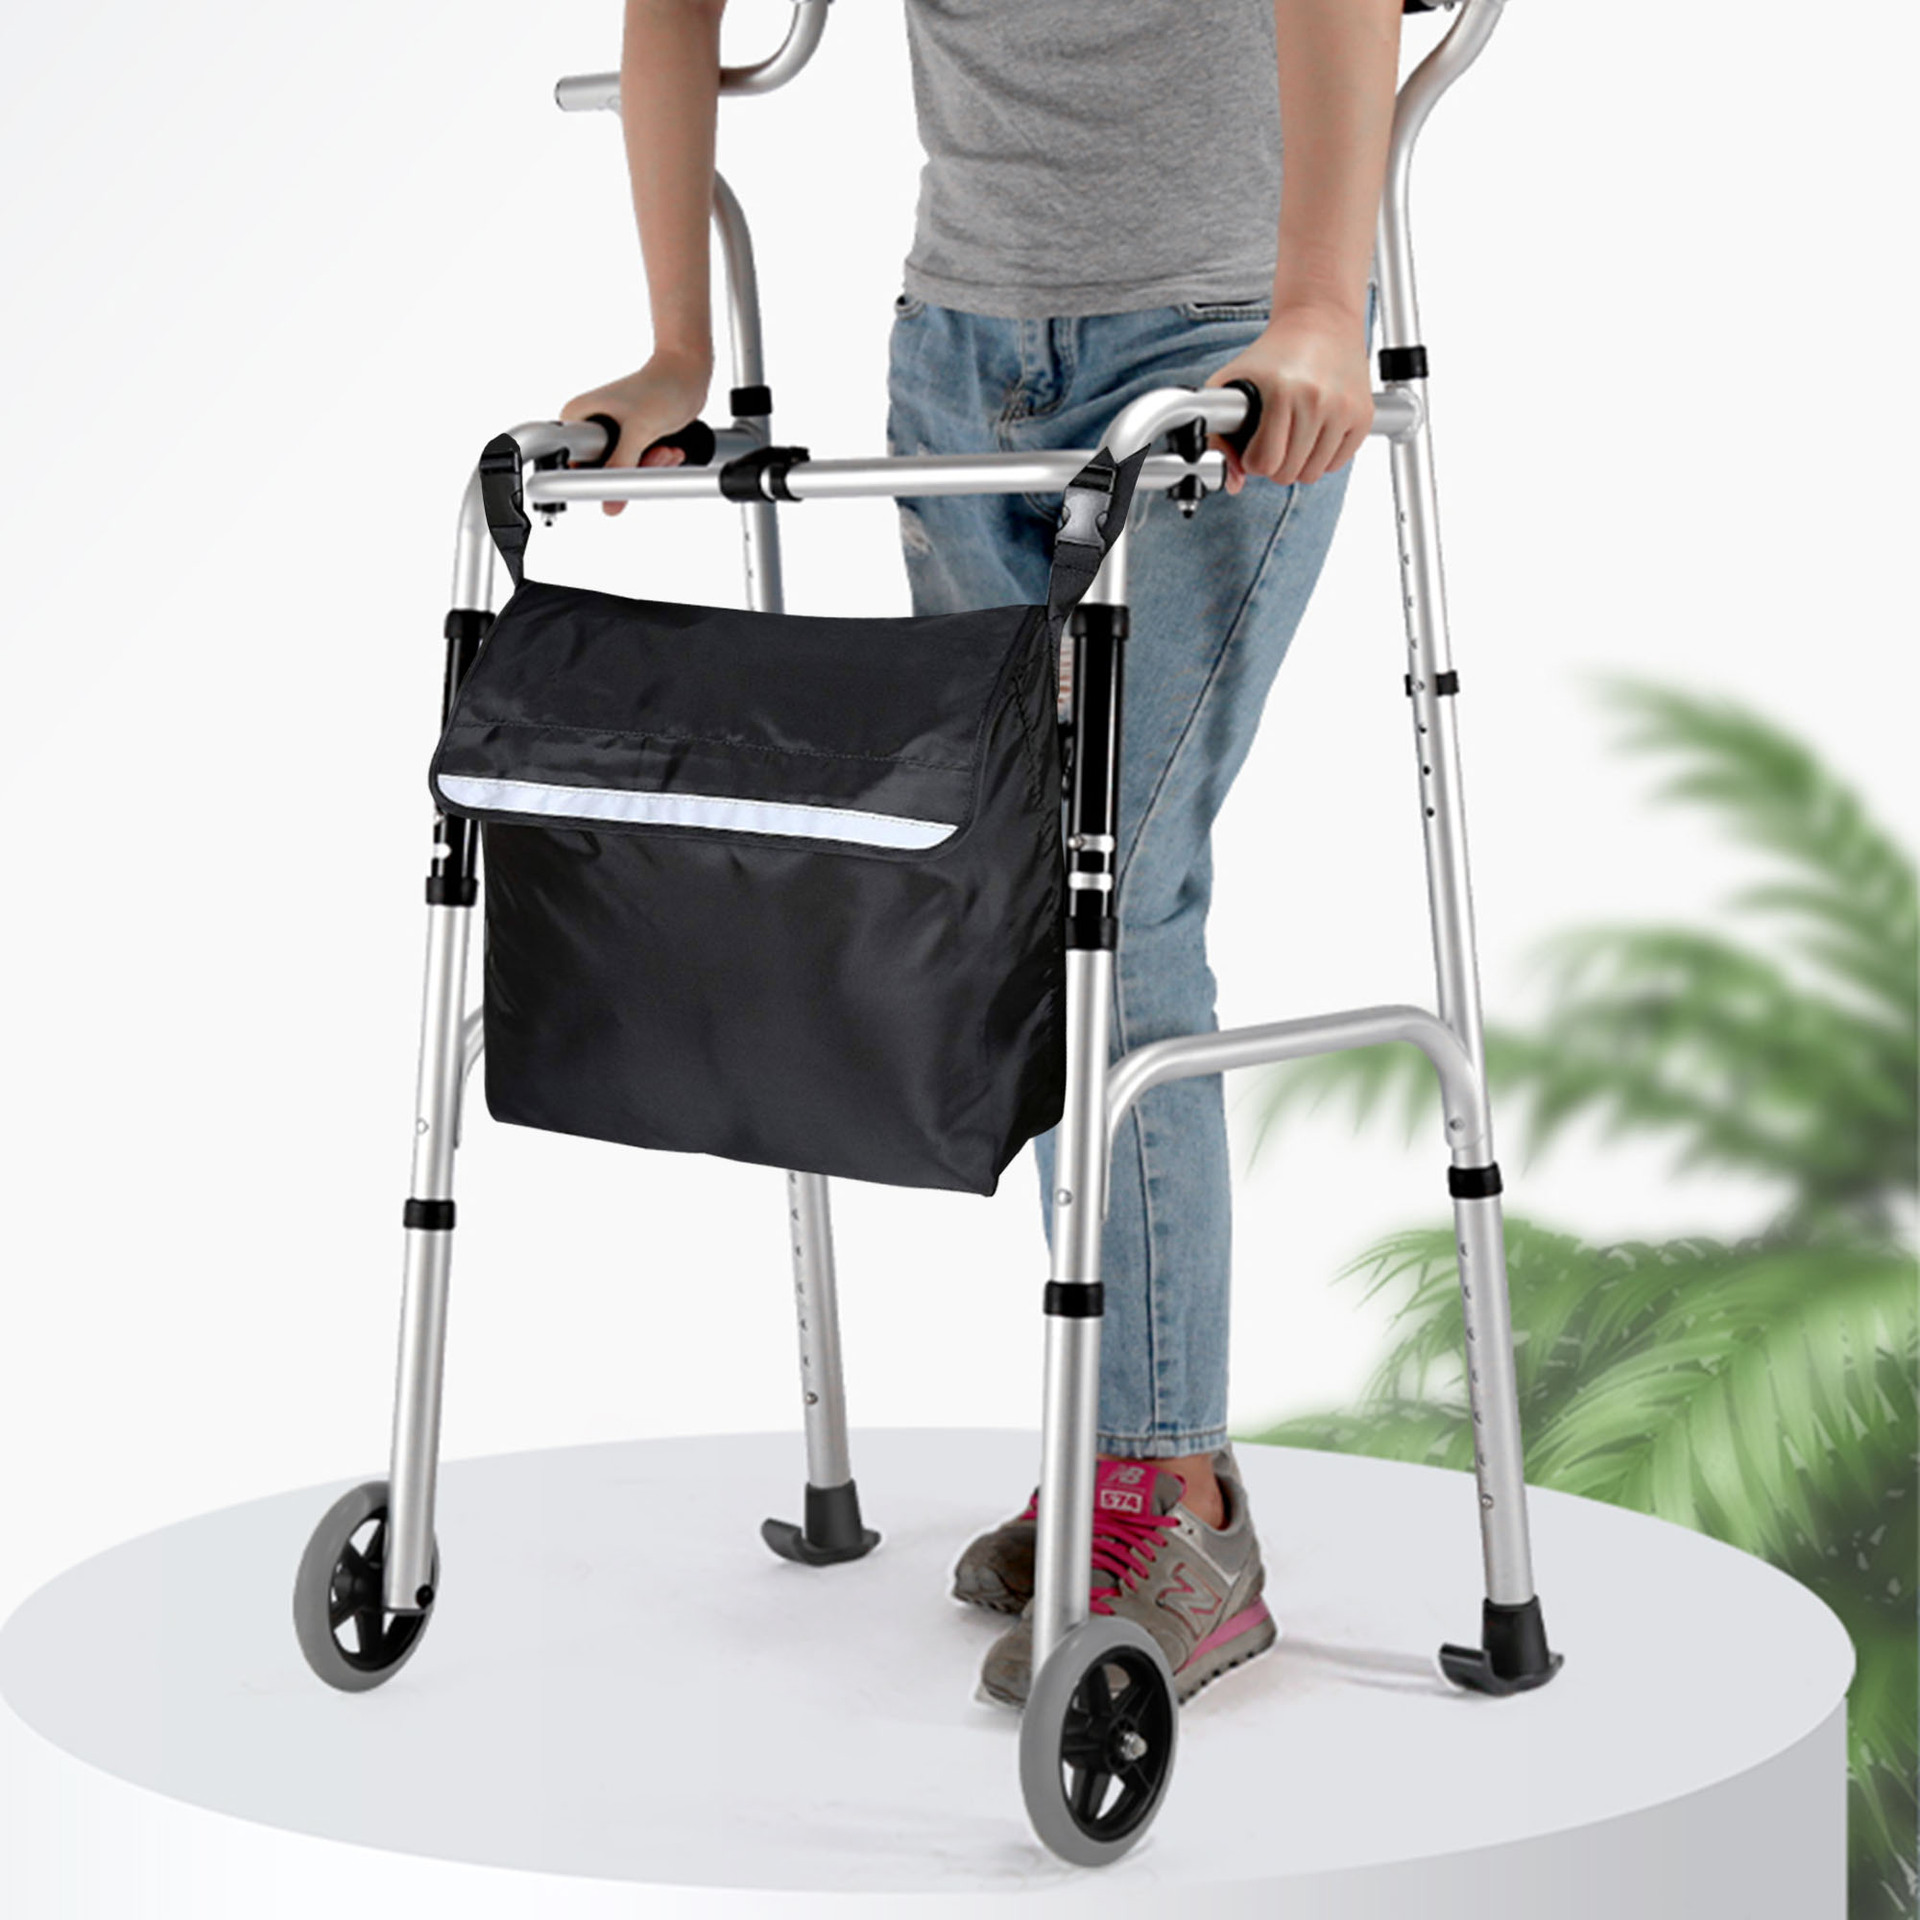 Wheelchair Bag 户外轮椅扶手包 电动轮椅摩托车等后驮包配件包详情图2